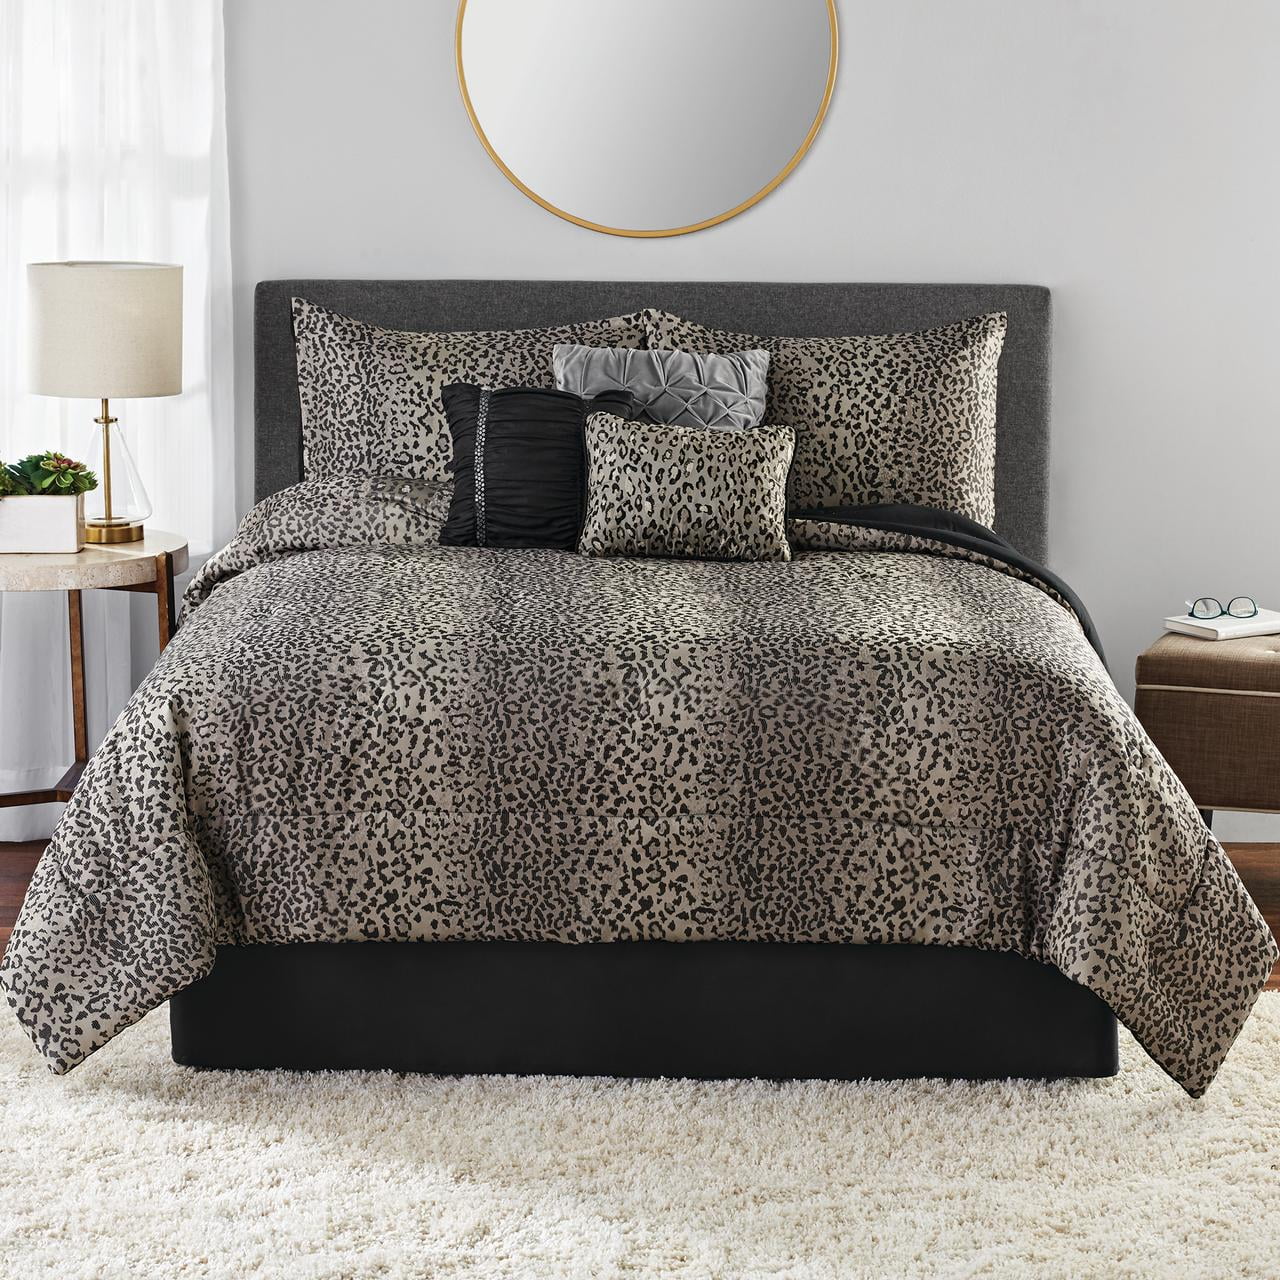 Mainstays Cheetah Jacquard 7 Piece Comforter Bedding Set - Walmart.com ...